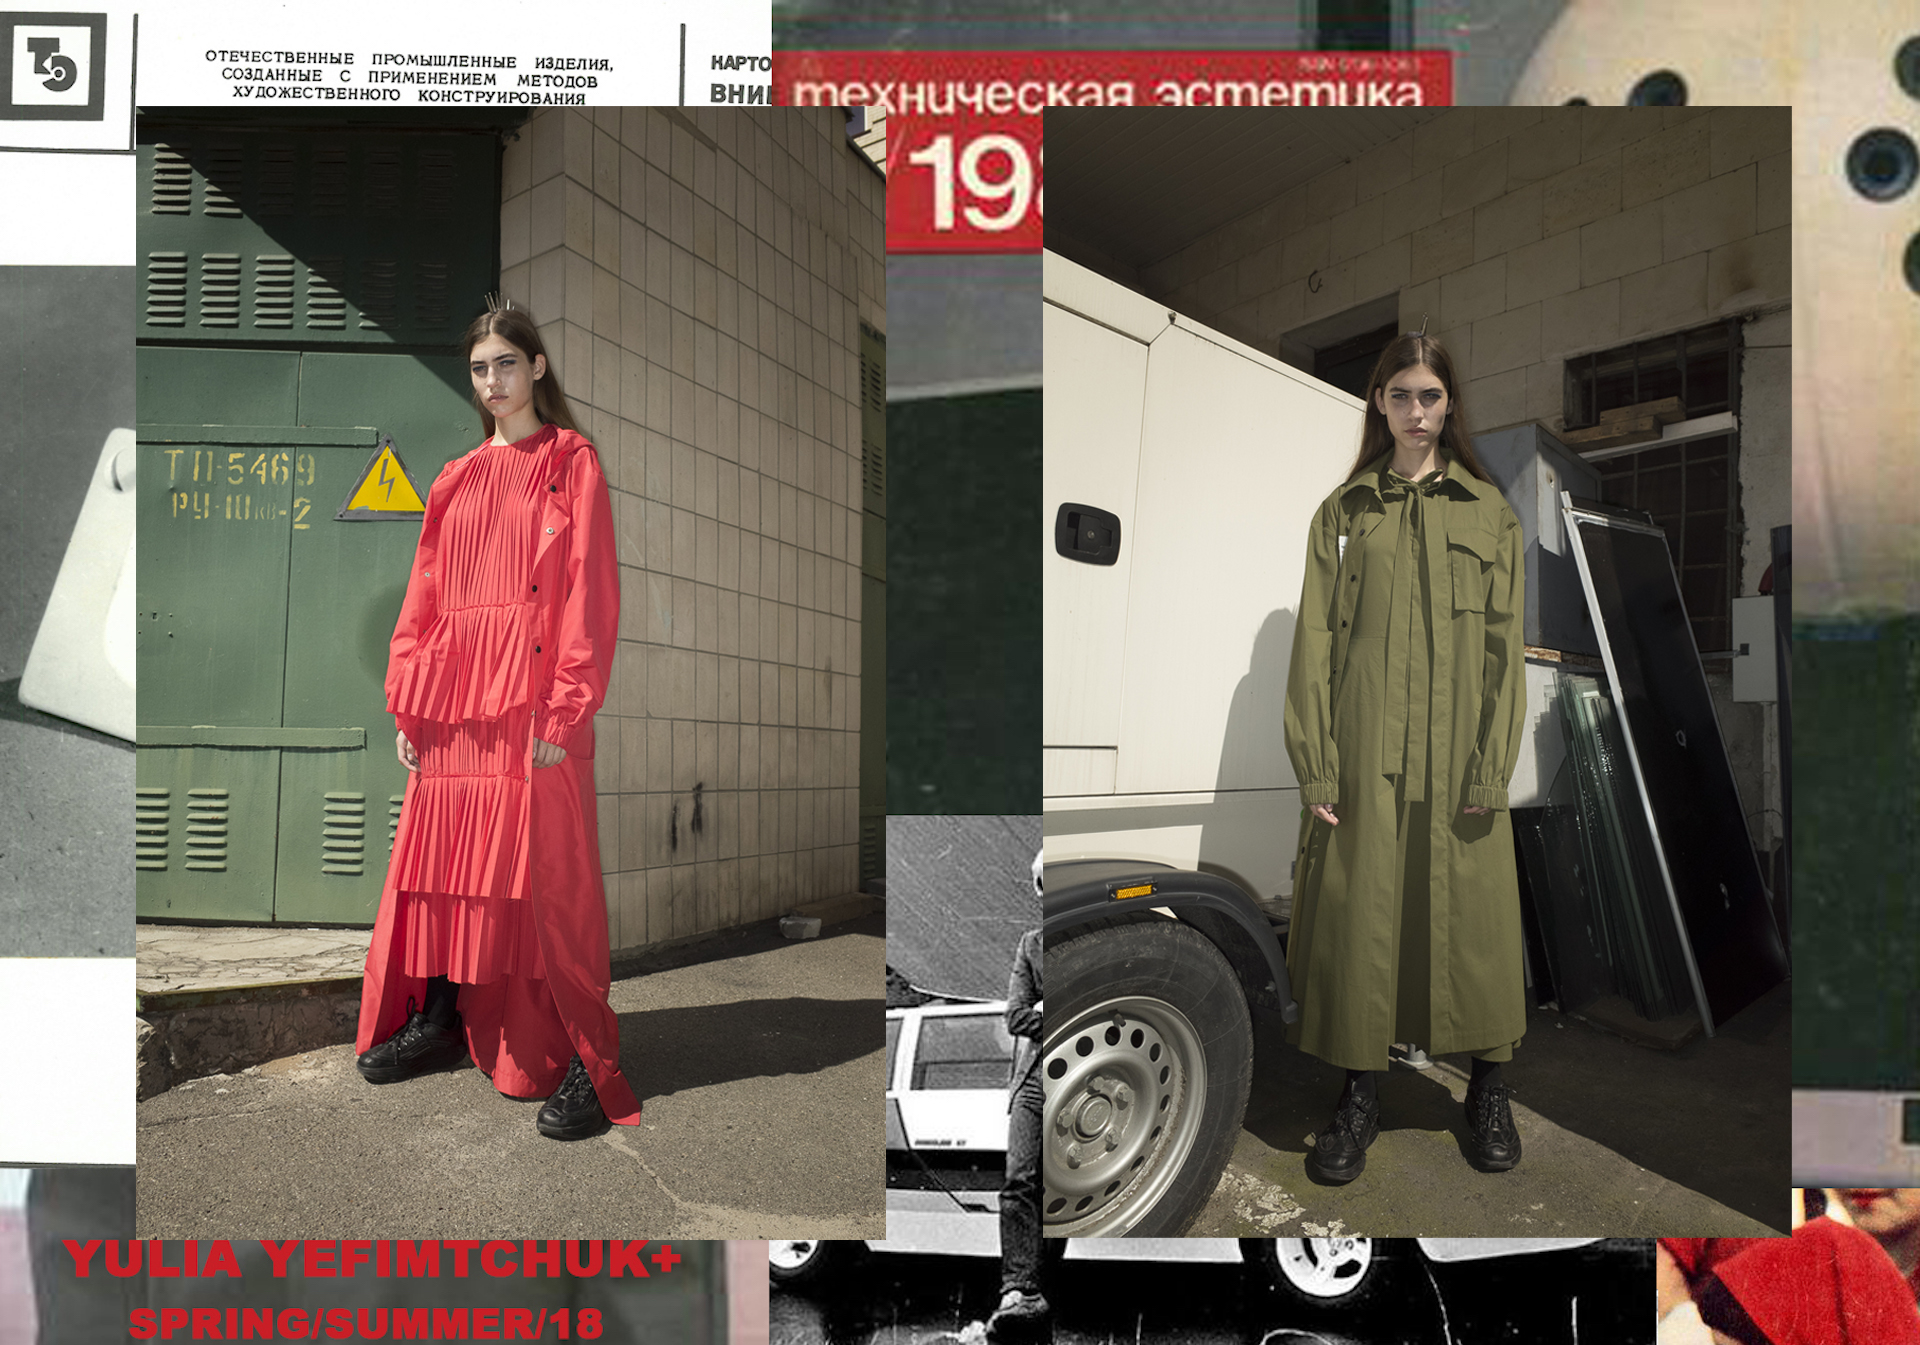 Back to work: how a rare Soviet magazine inspired designer Yulia Yefimtchuk’s bold new uniform